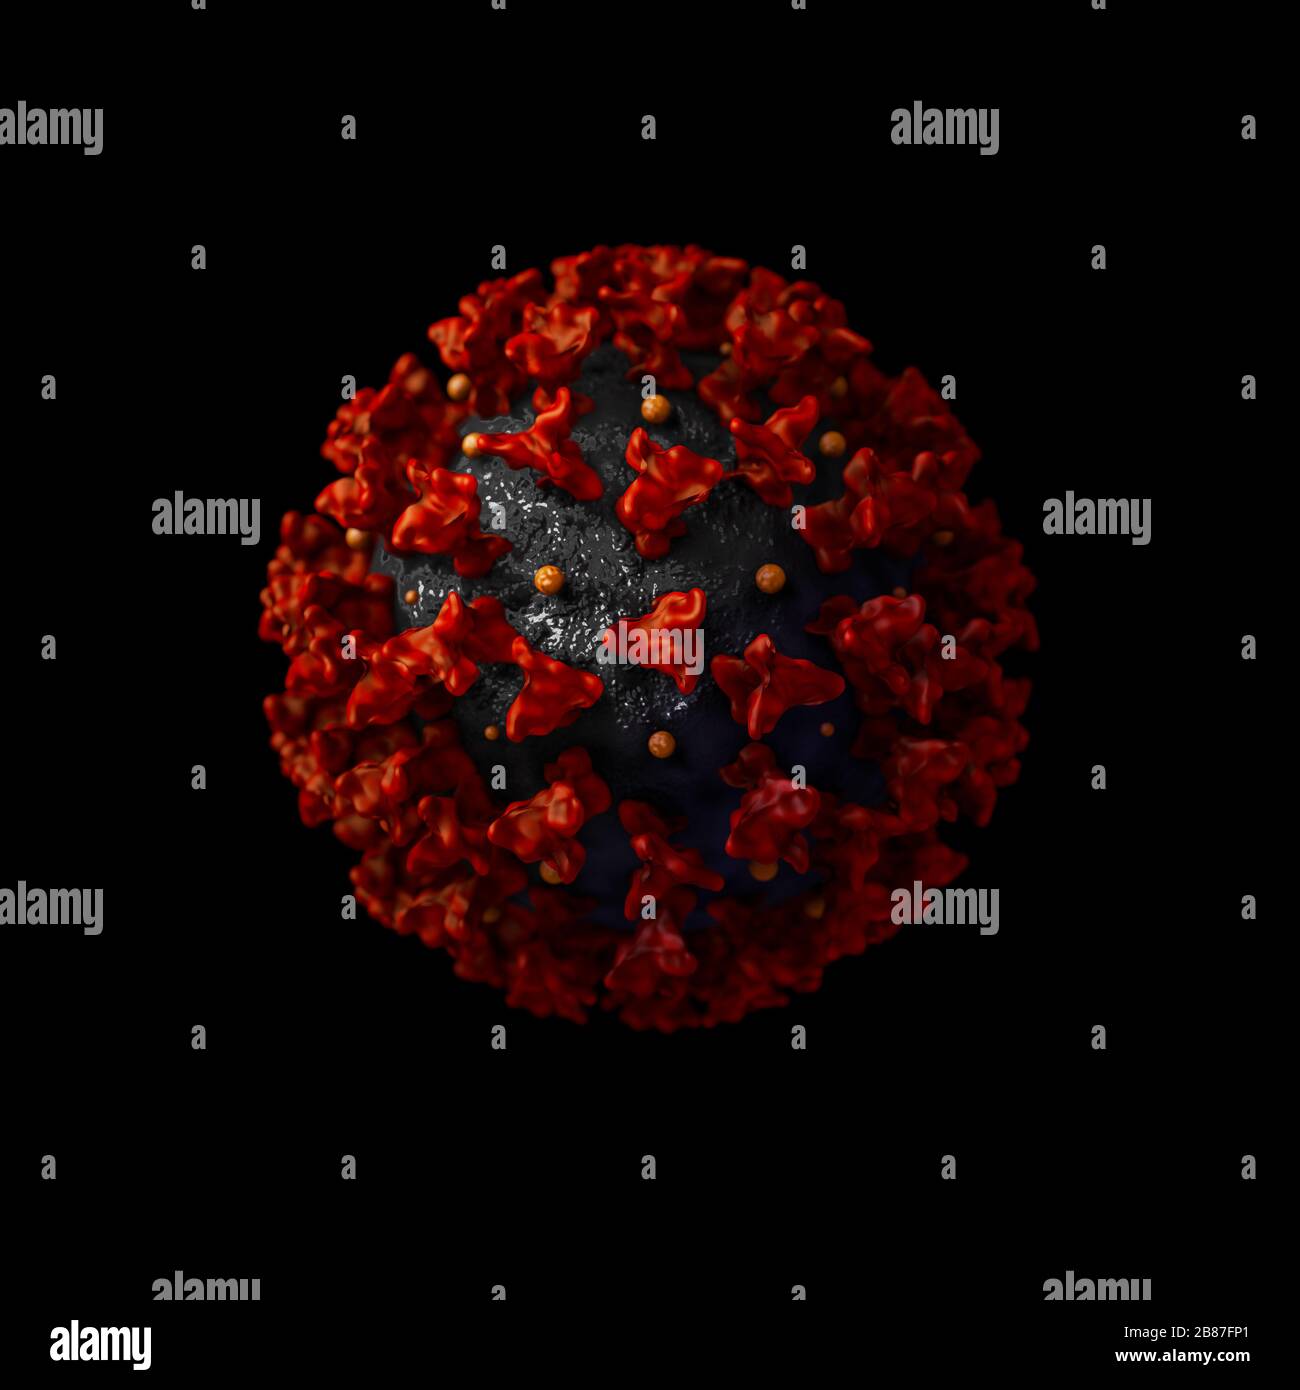 COVID-19 Isolated on a black background Chinese coronavirus under the microscope. Realistic 3d illustration. Pandemic, disease. Floating China Stock Photo